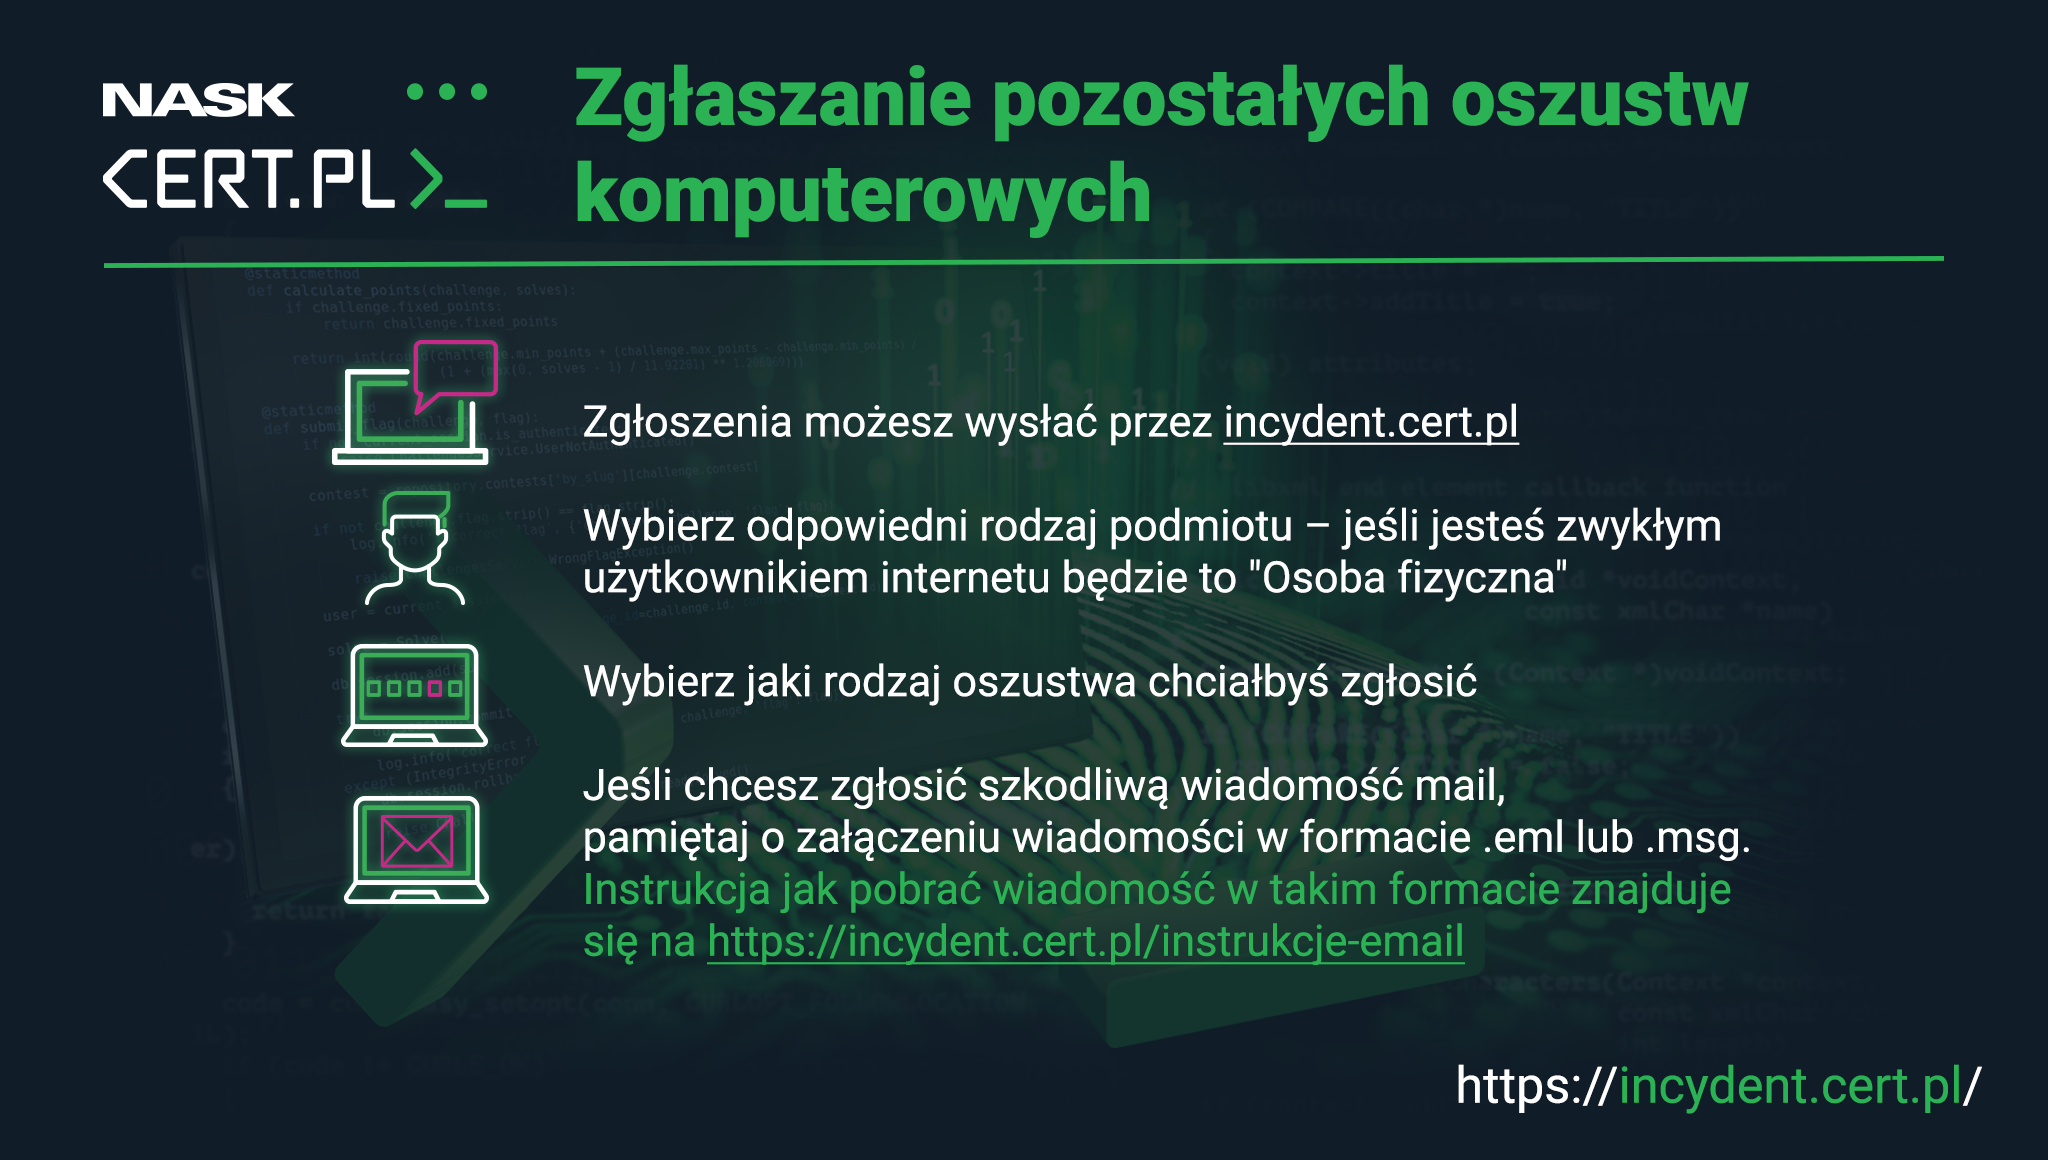 nask-i-cert-polska-dezinformacja-oszustwa-rekomendacje 01